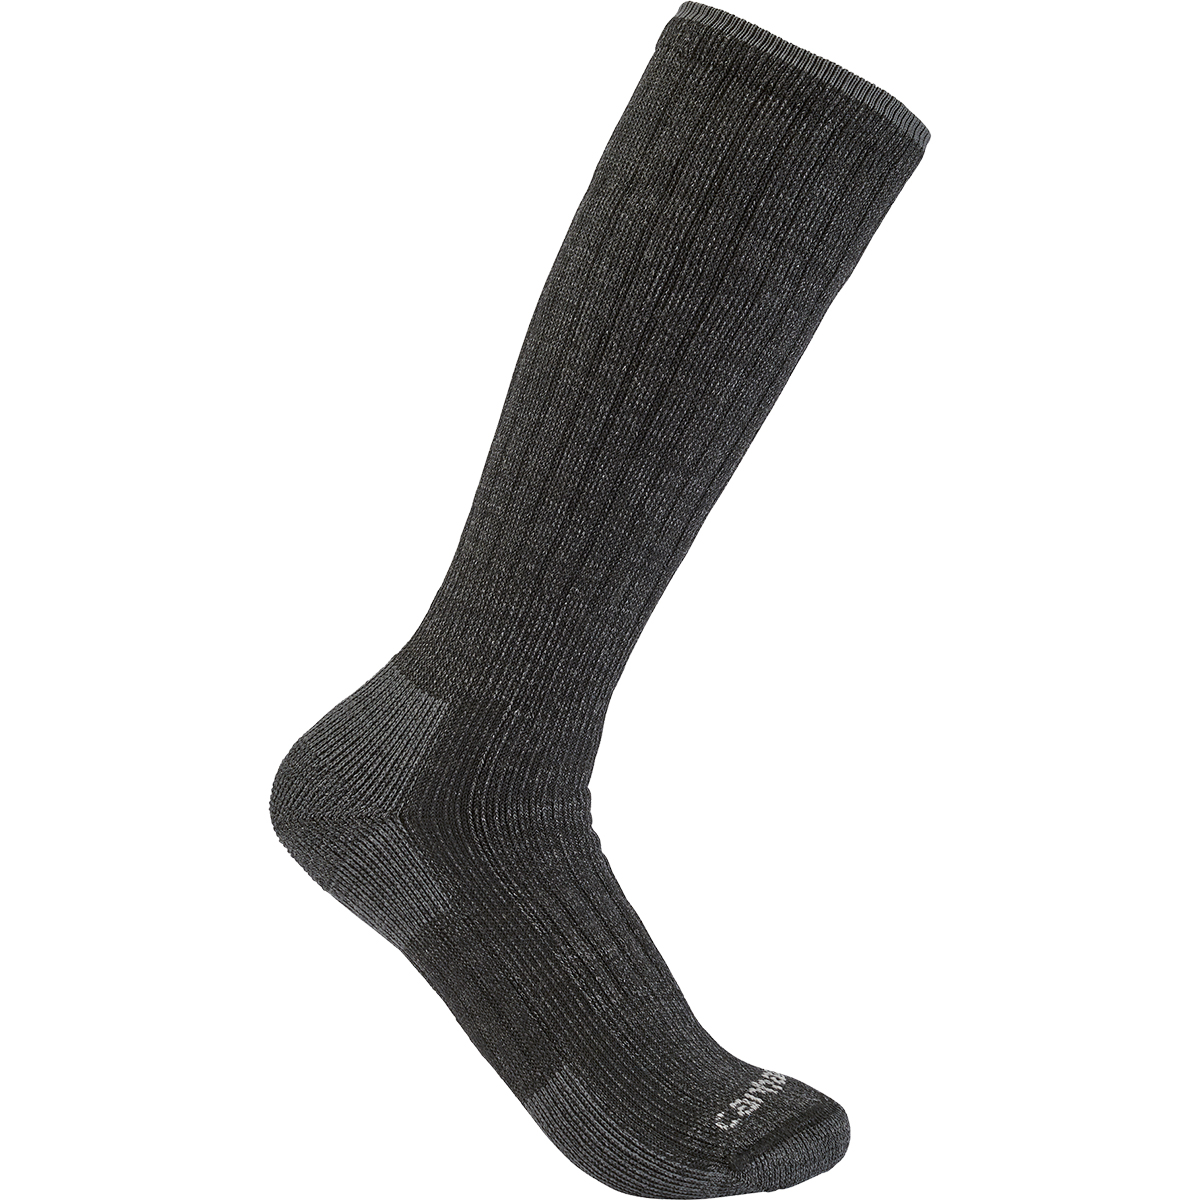 Carhartt Men's Midweight Synthetic-Wool Blend Boot Socks